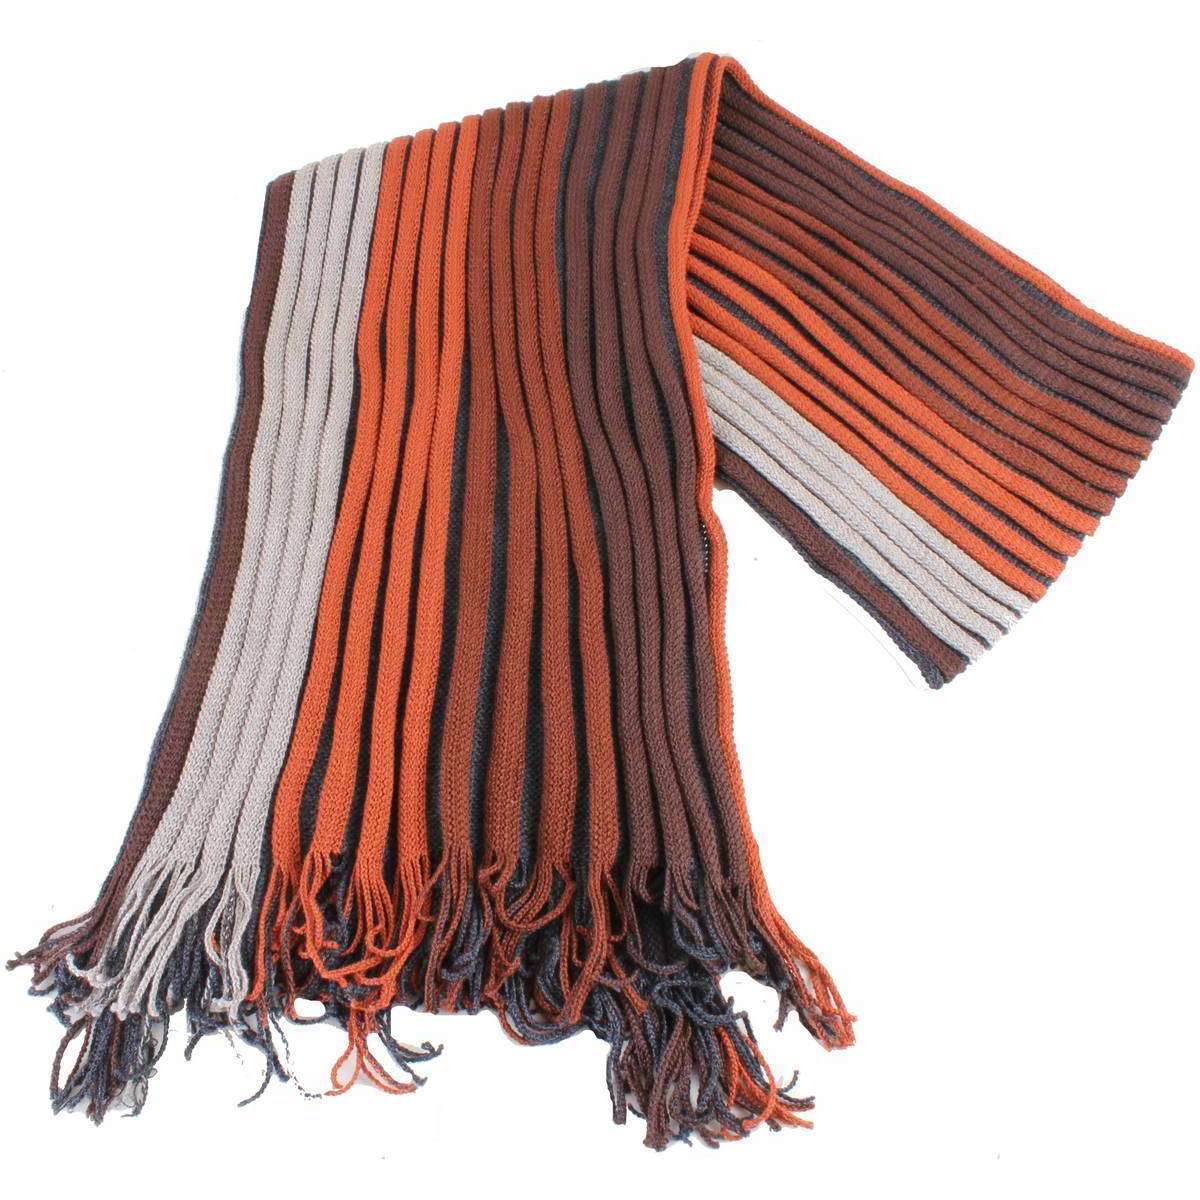 Bassin and Brown Dalglish Striped Wool Scarf - Brown/Rust/Grey